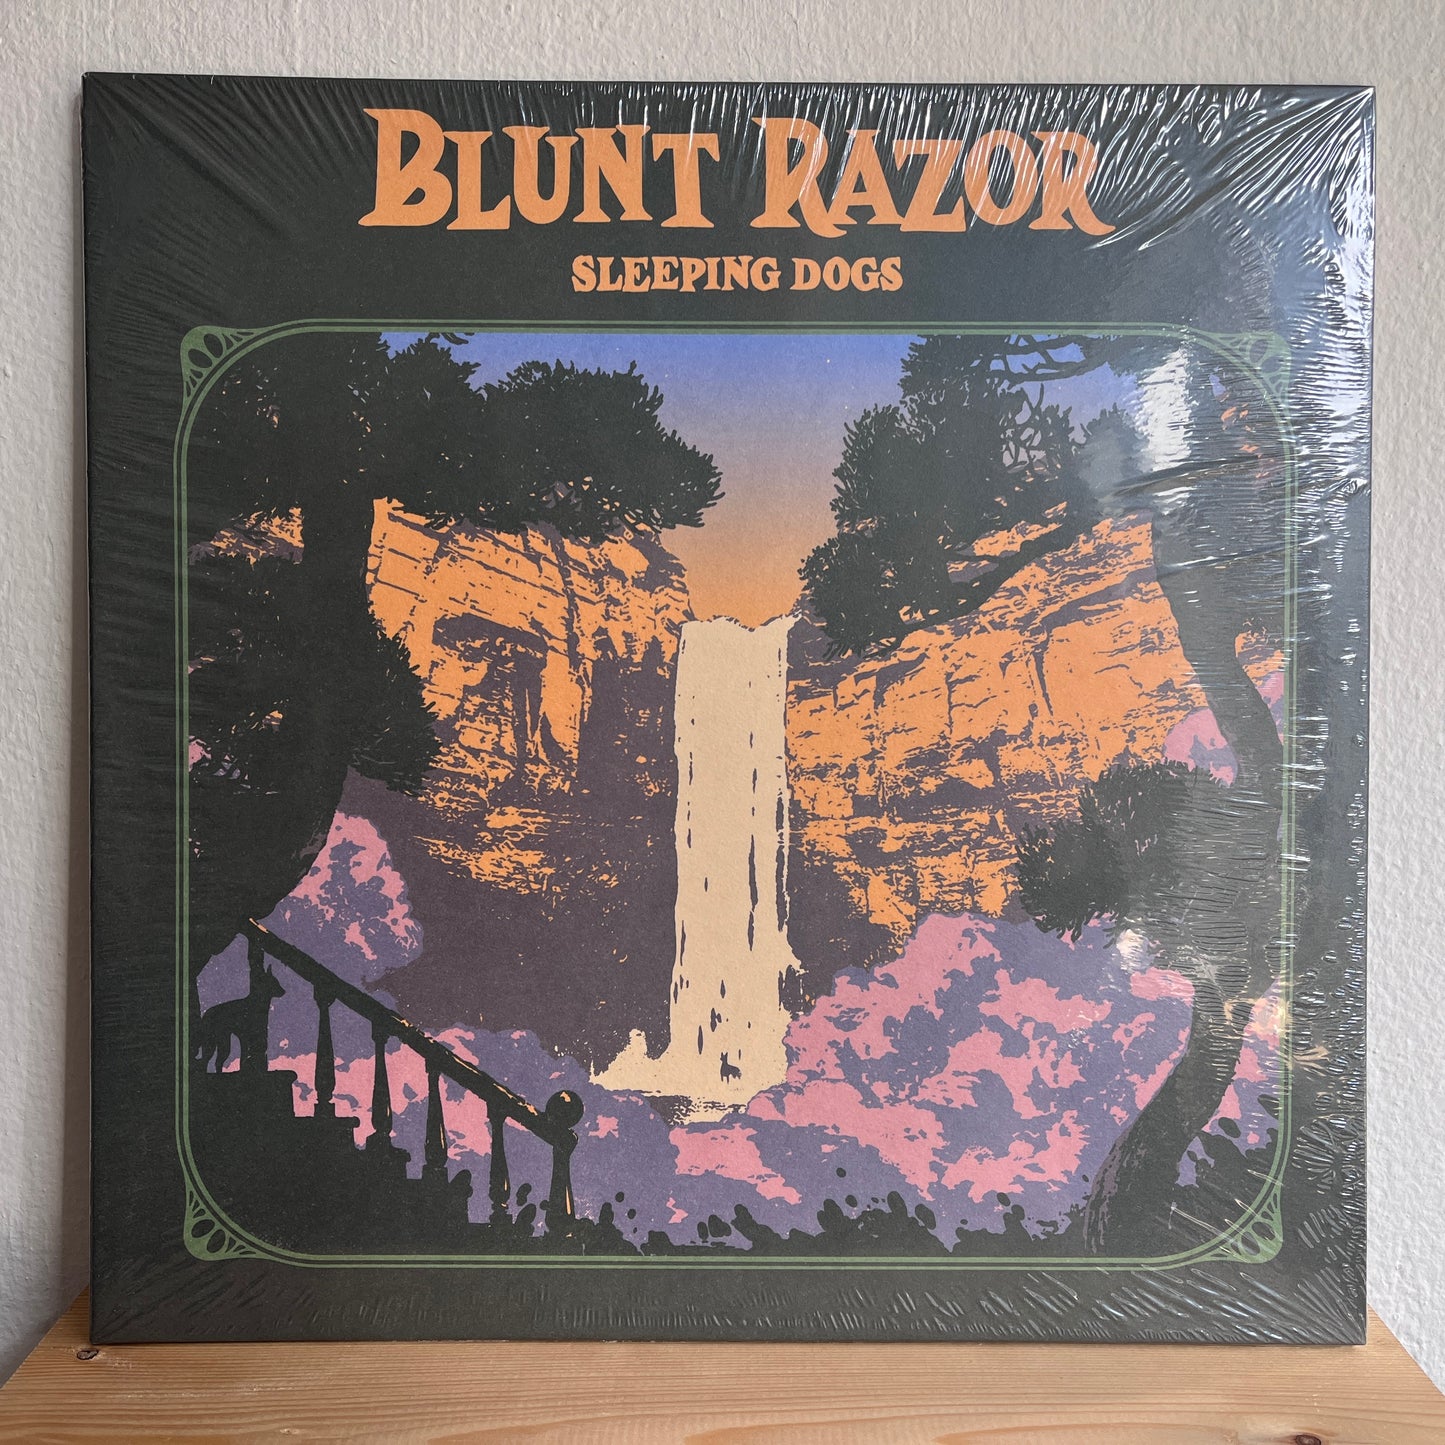 Sleeping Dogs – Blunt Razor